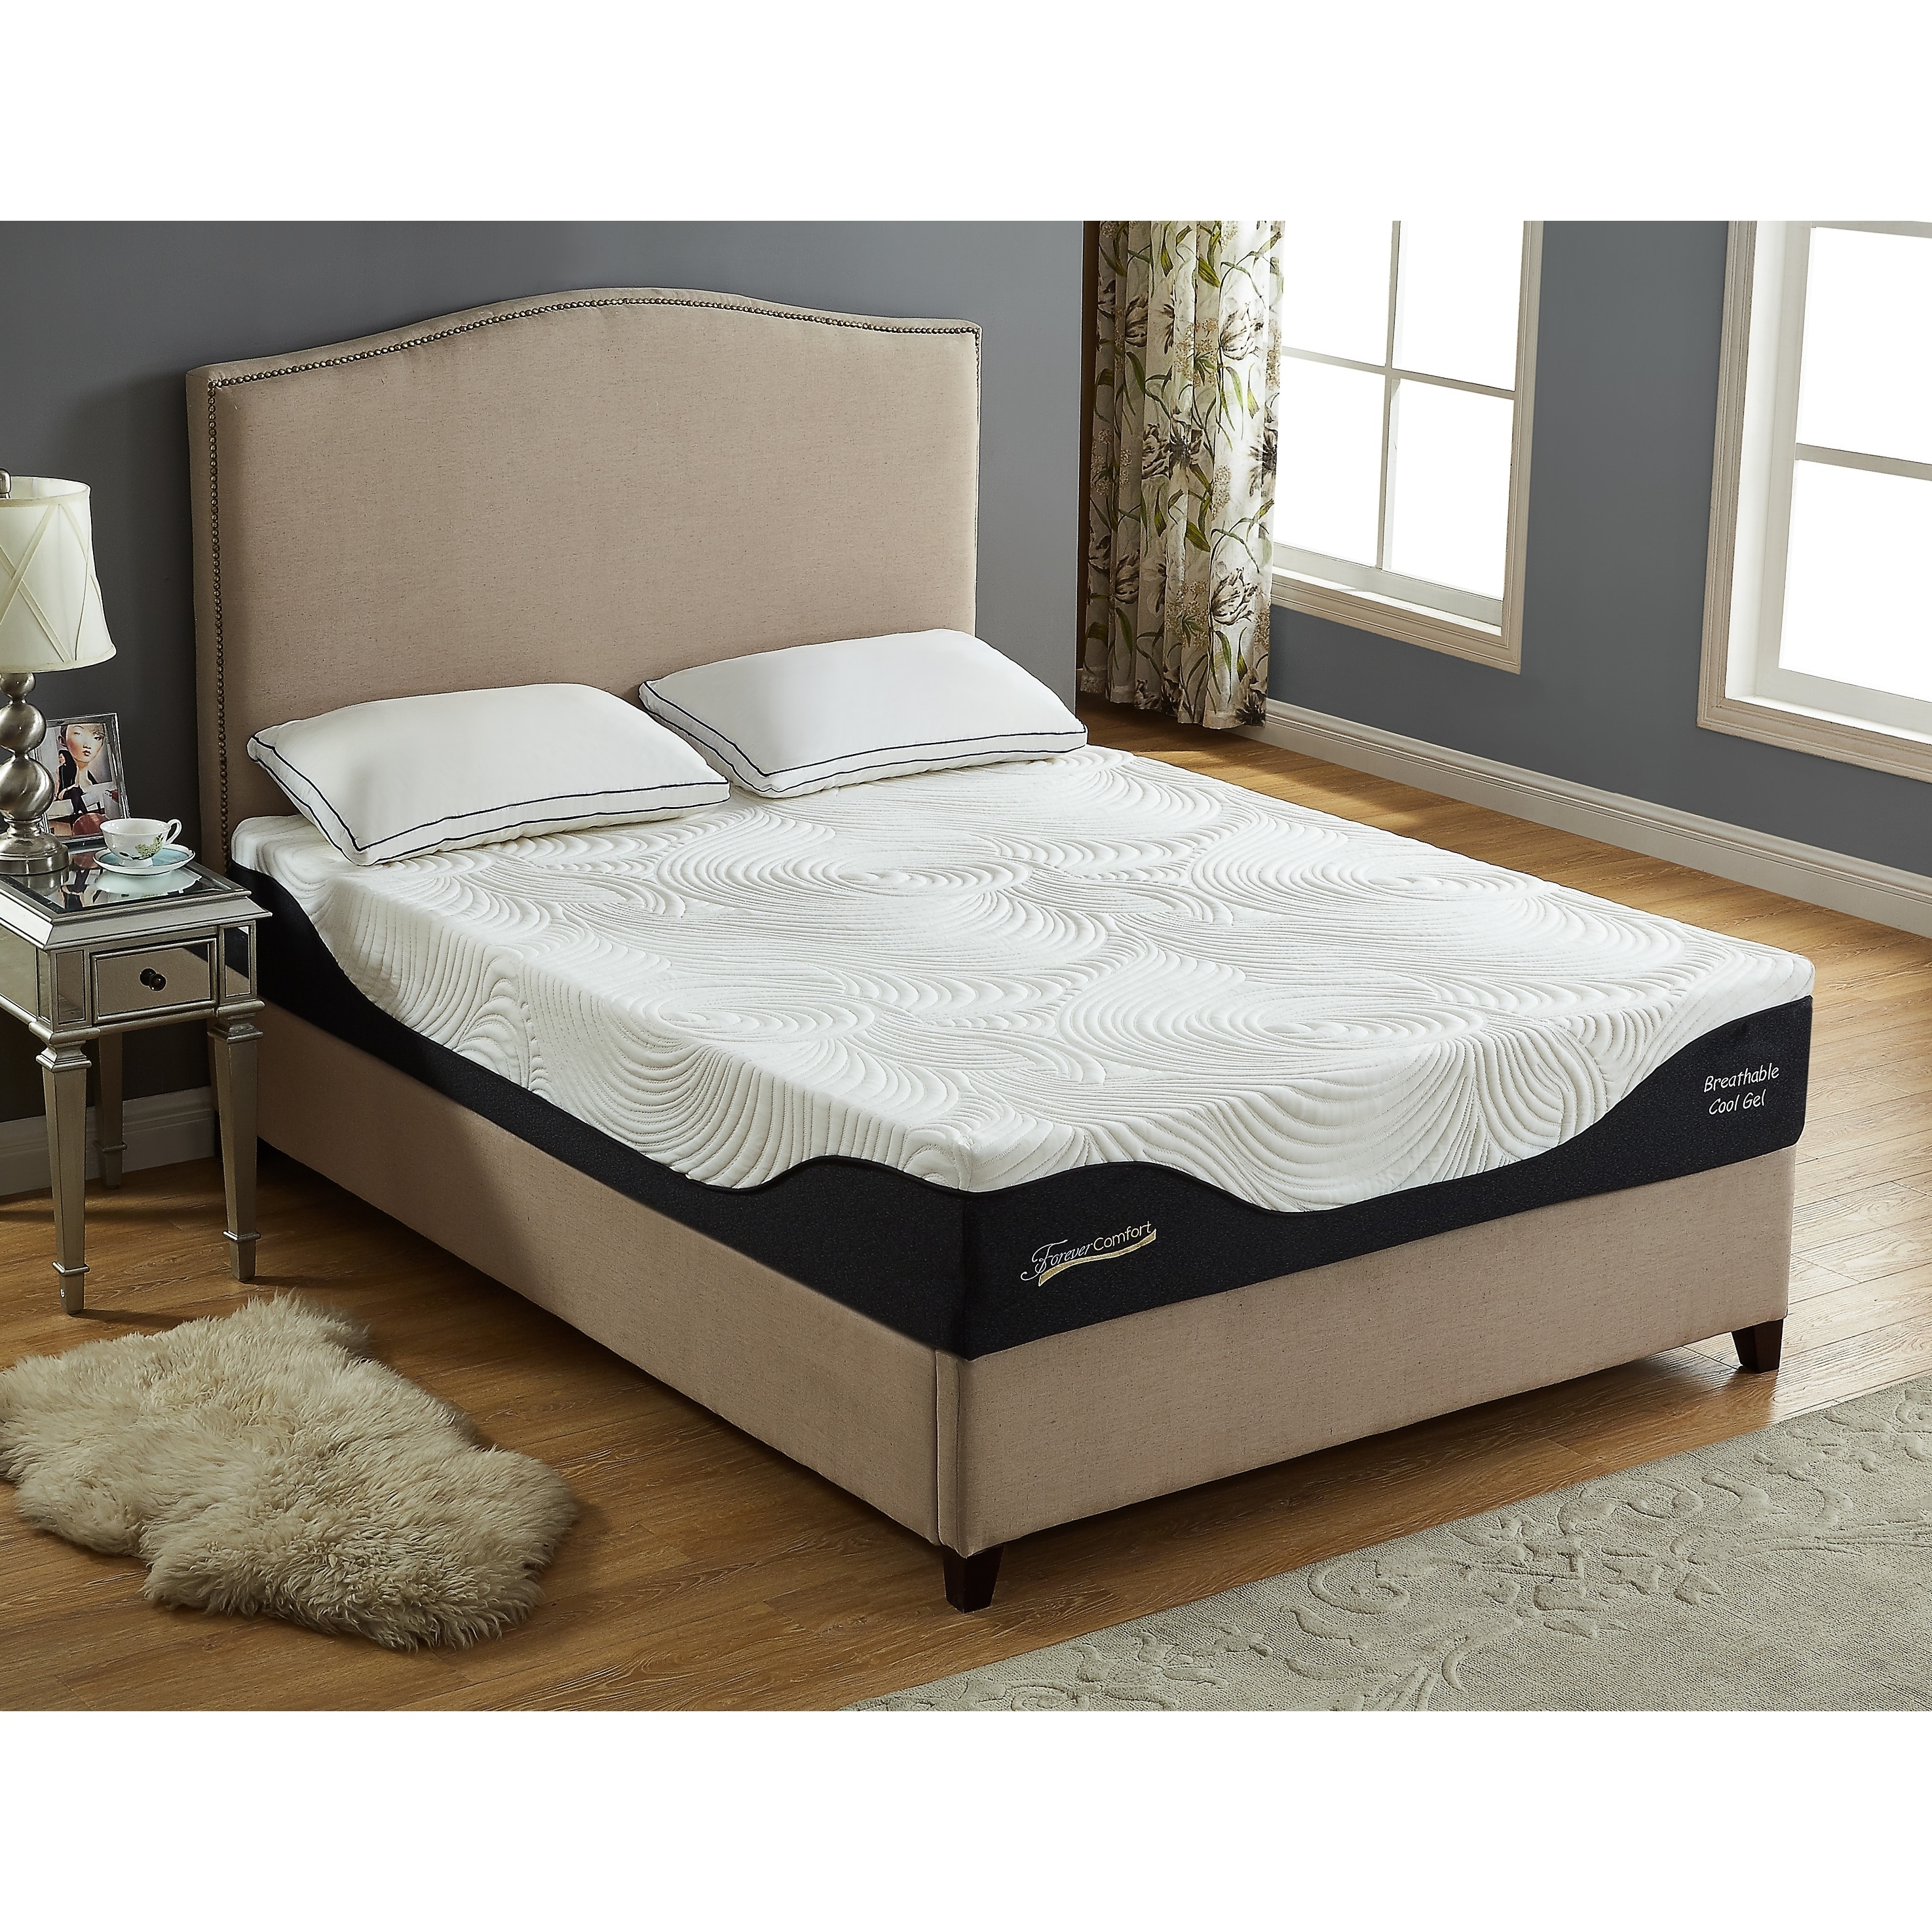 8 Inch Air Flow Memory Foam Mattress Best Price Bed XL ...